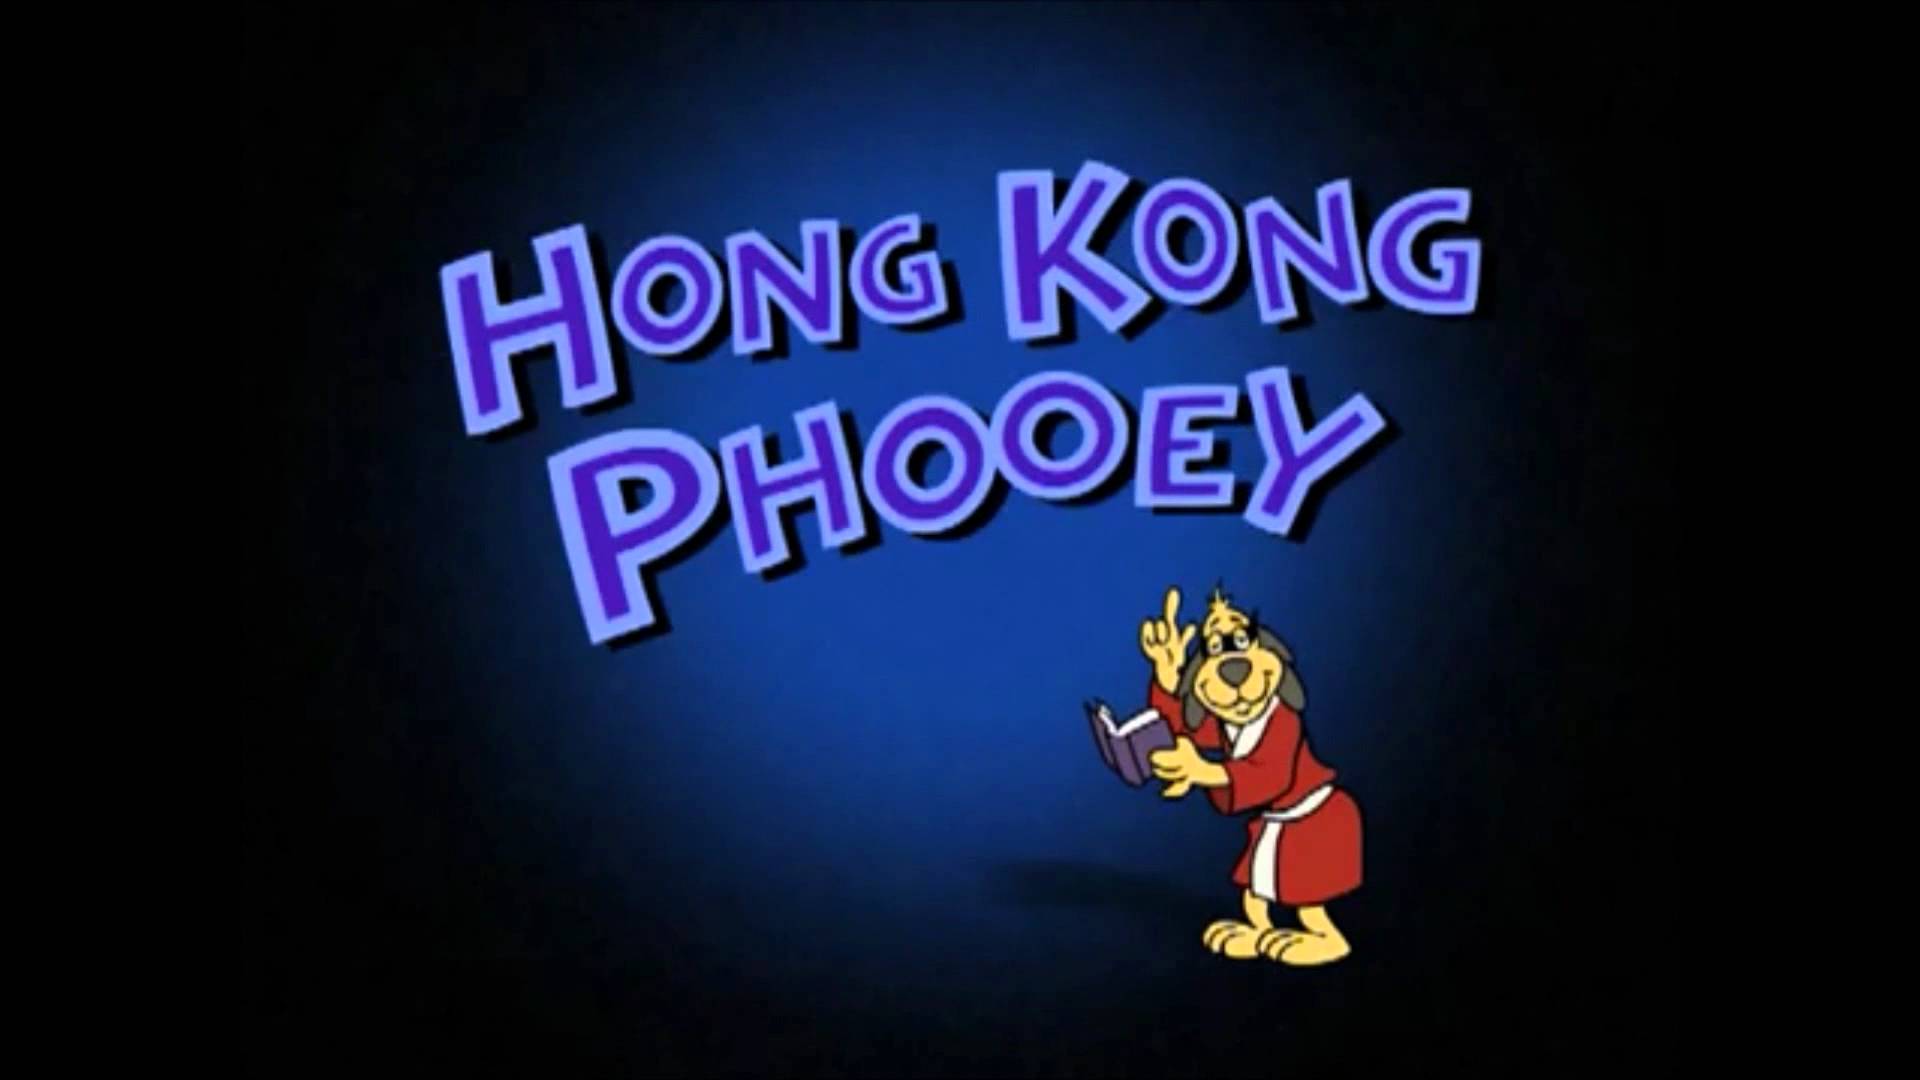 Hong kong phooey wallpapers 26259 3051299